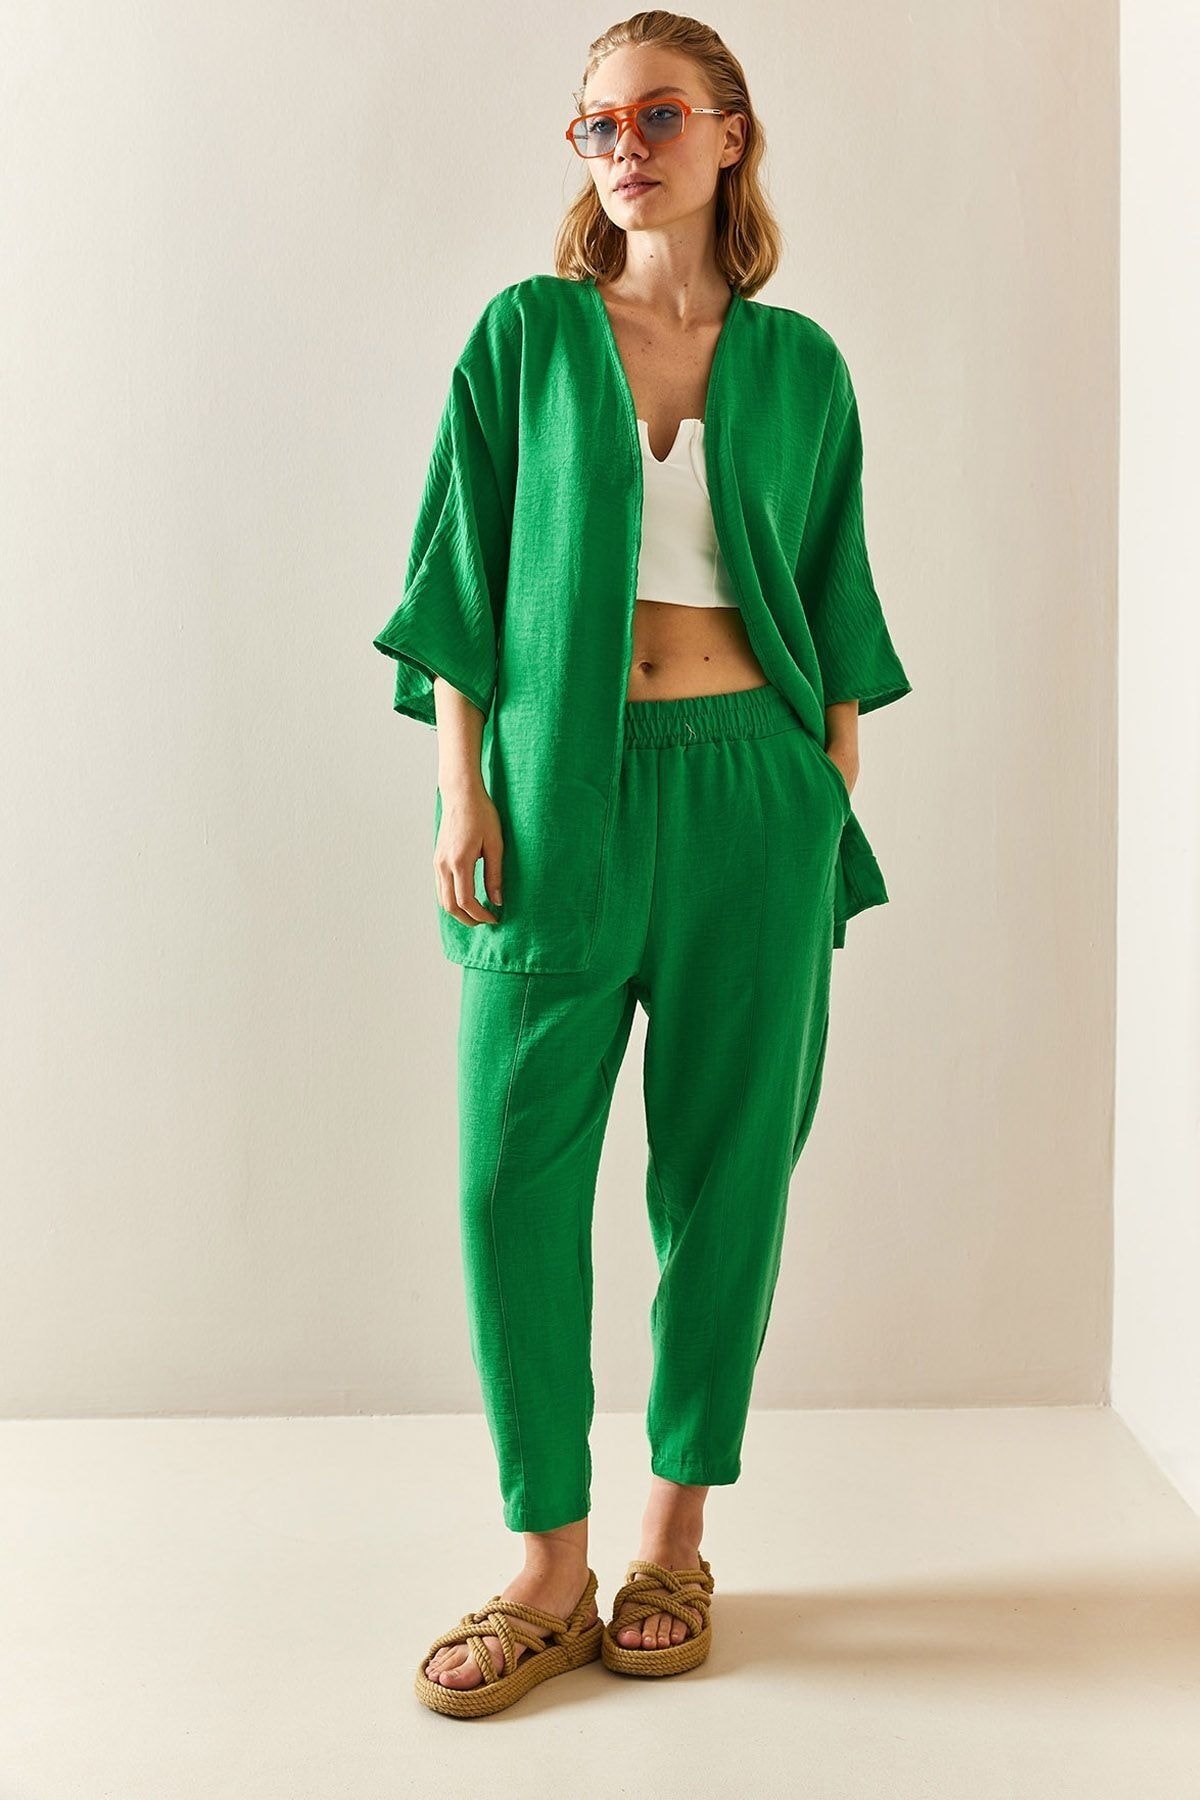 XHAN Loose Green Kimono Suit